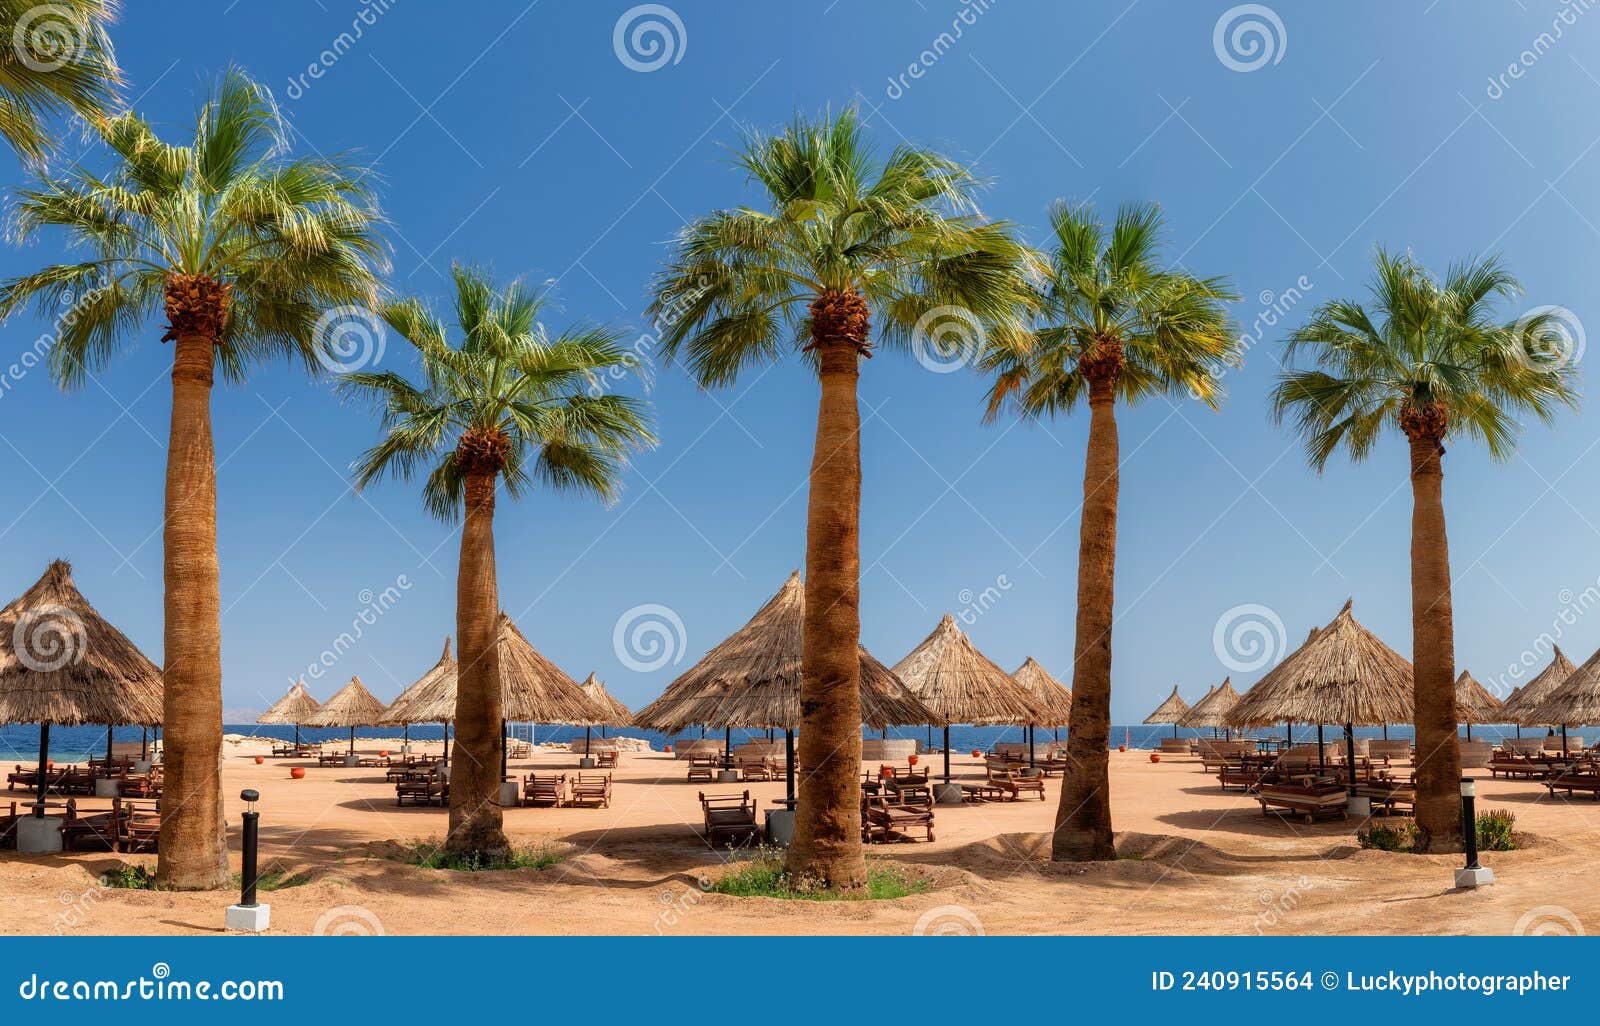 tropical resort, palm trees in sunny beach in sharm al sheikh, egypt, africa.